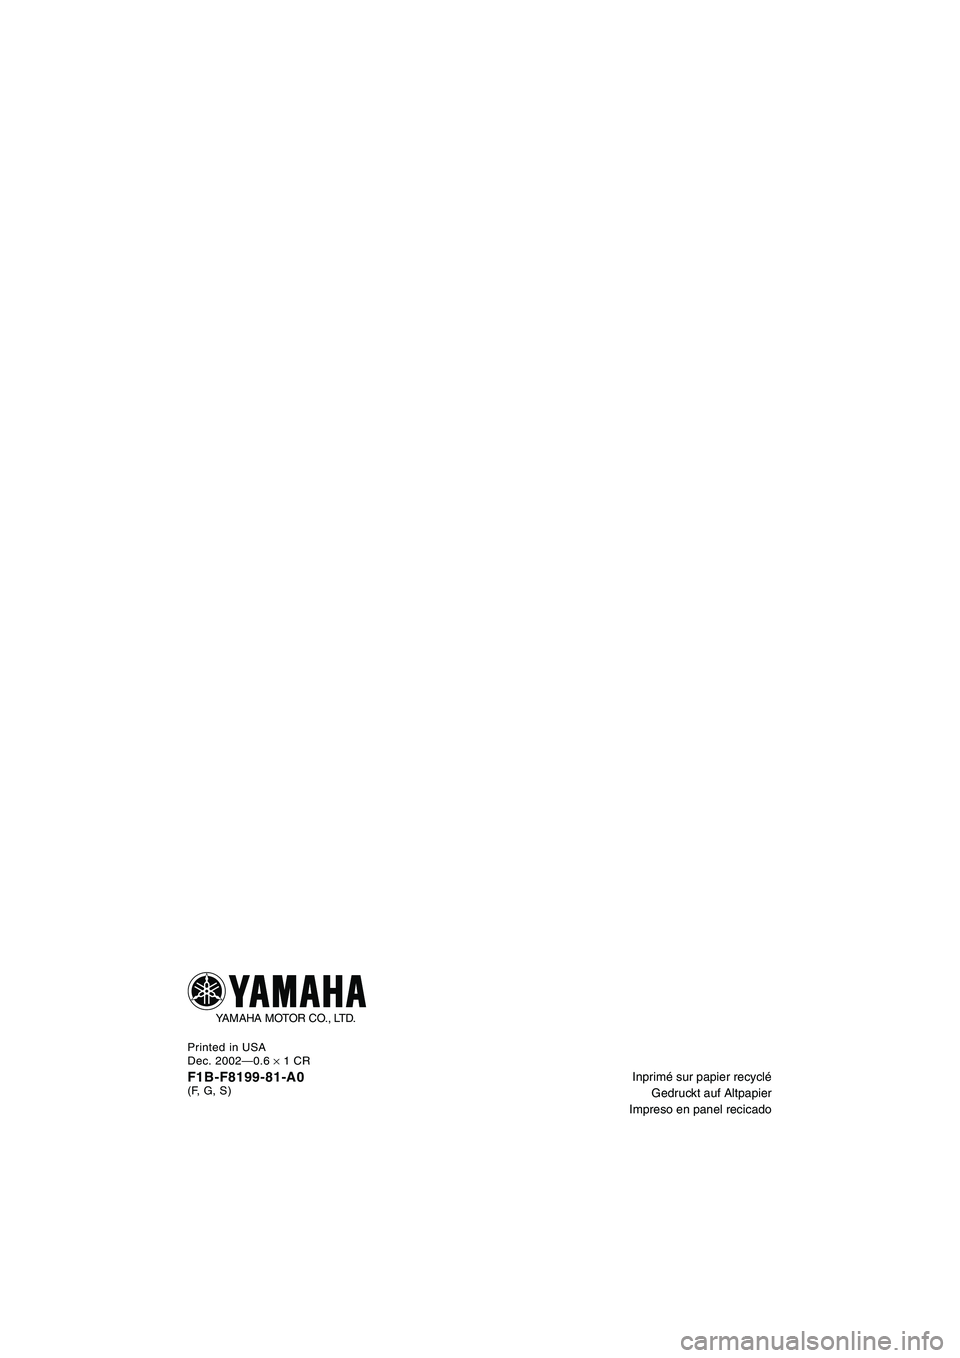 YAMAHA FX 2003  Betriebsanleitungen (in German) Inprimé sur papier recyclé
Gedruckt auf Altpapier
Impreso en panel recicado
Printed in USA
Dec. 2002—0.6 
× 1 CR
F1B-F8199-81-A0(F, G, S)
YAMAHA MOTOR CO., LTD.
UF1B81A0.book  Page 1  Tuesday, No